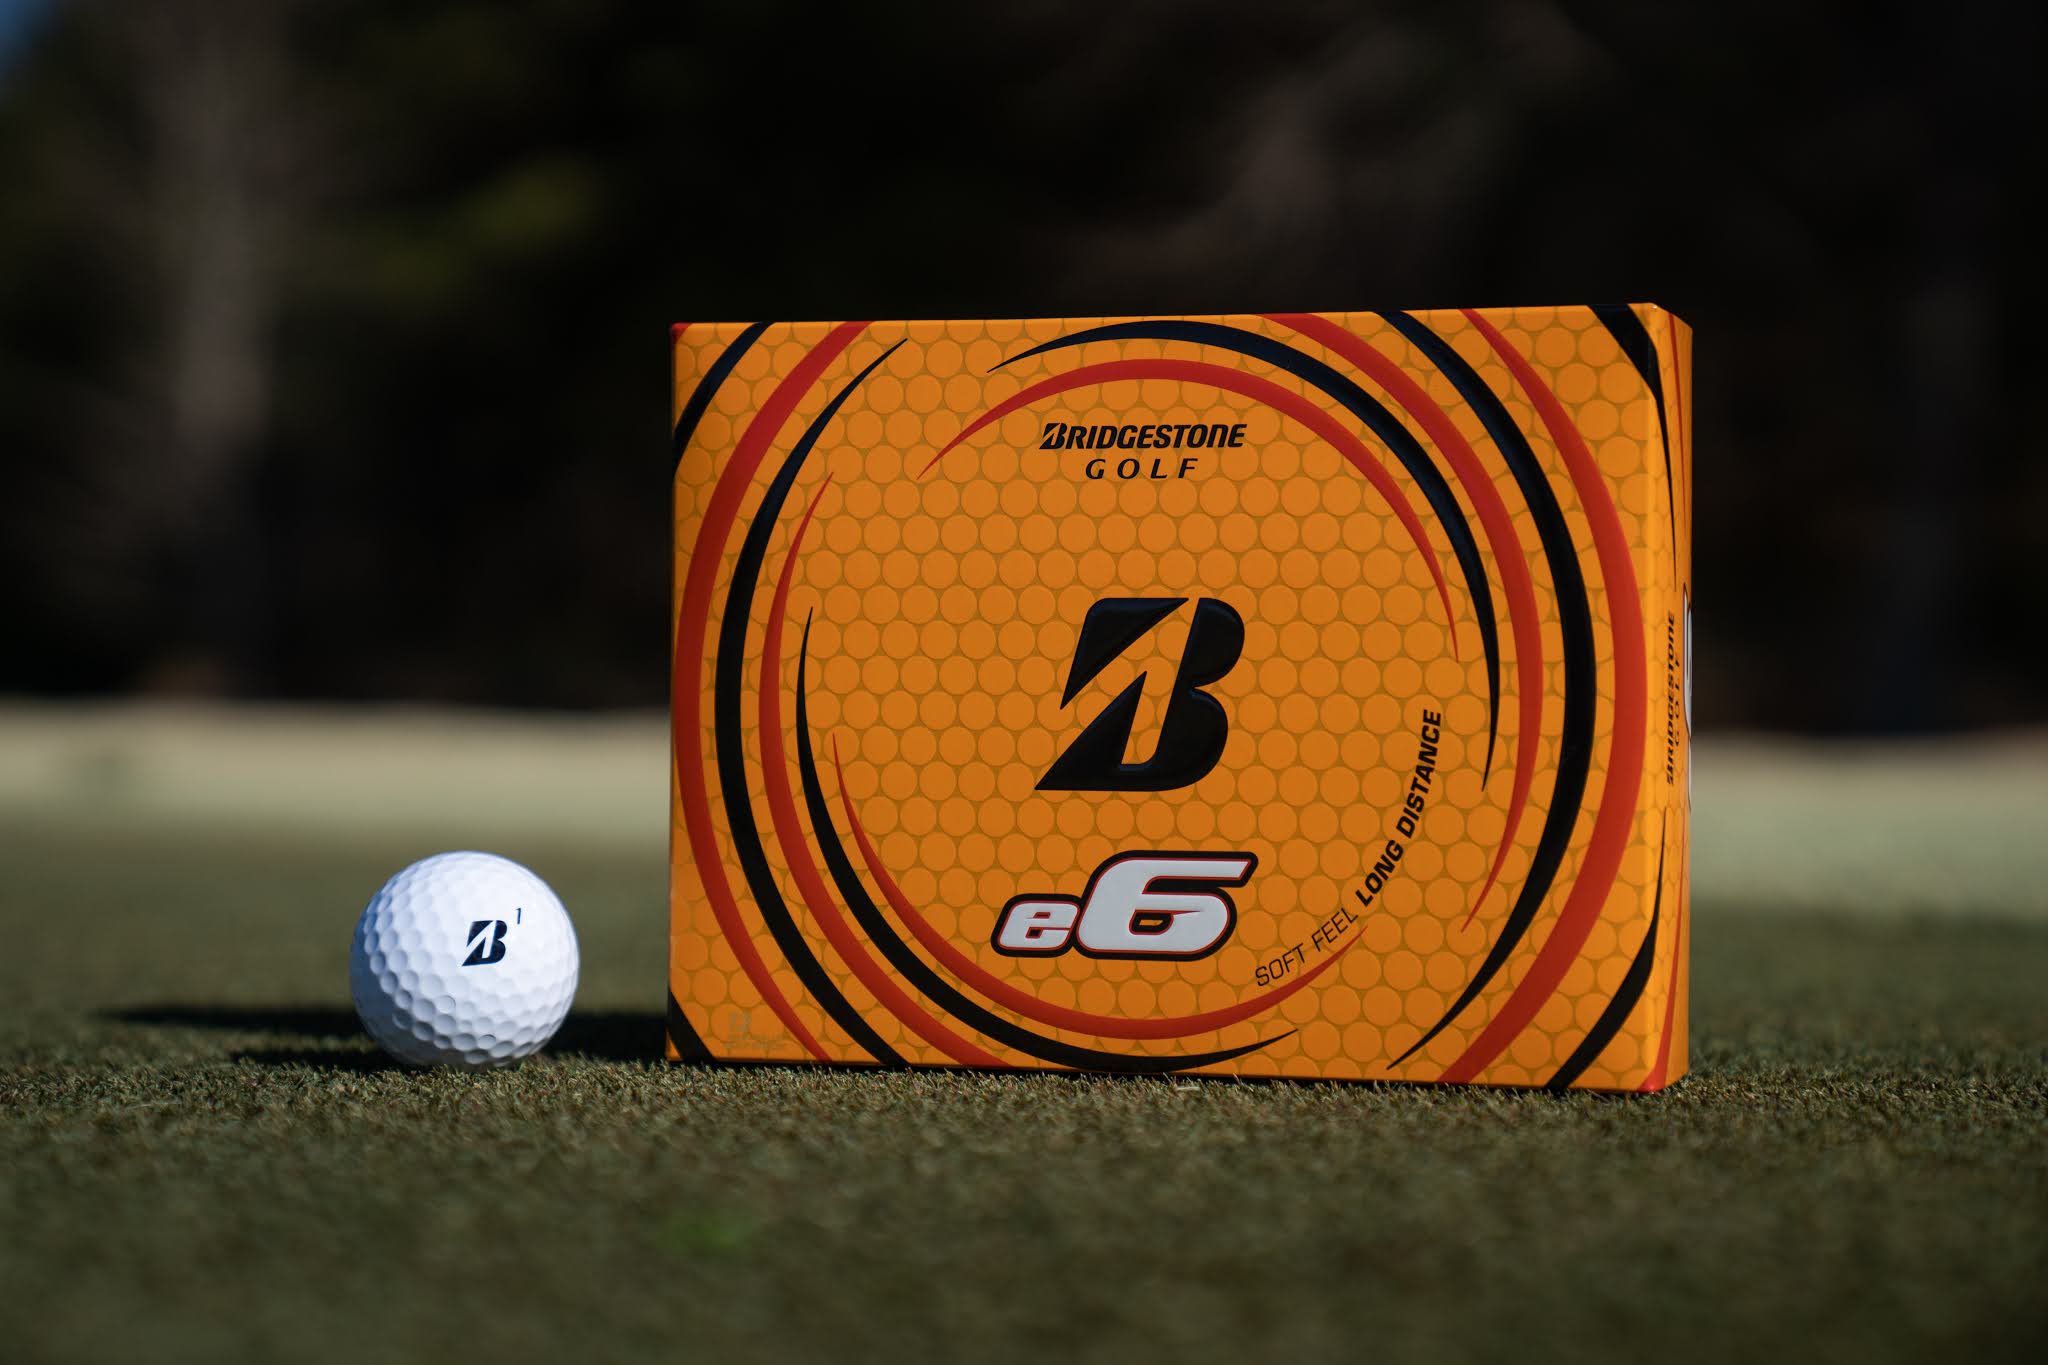 American Golfer Bridgestone e6 Golf Ball Modified for Improved Feel